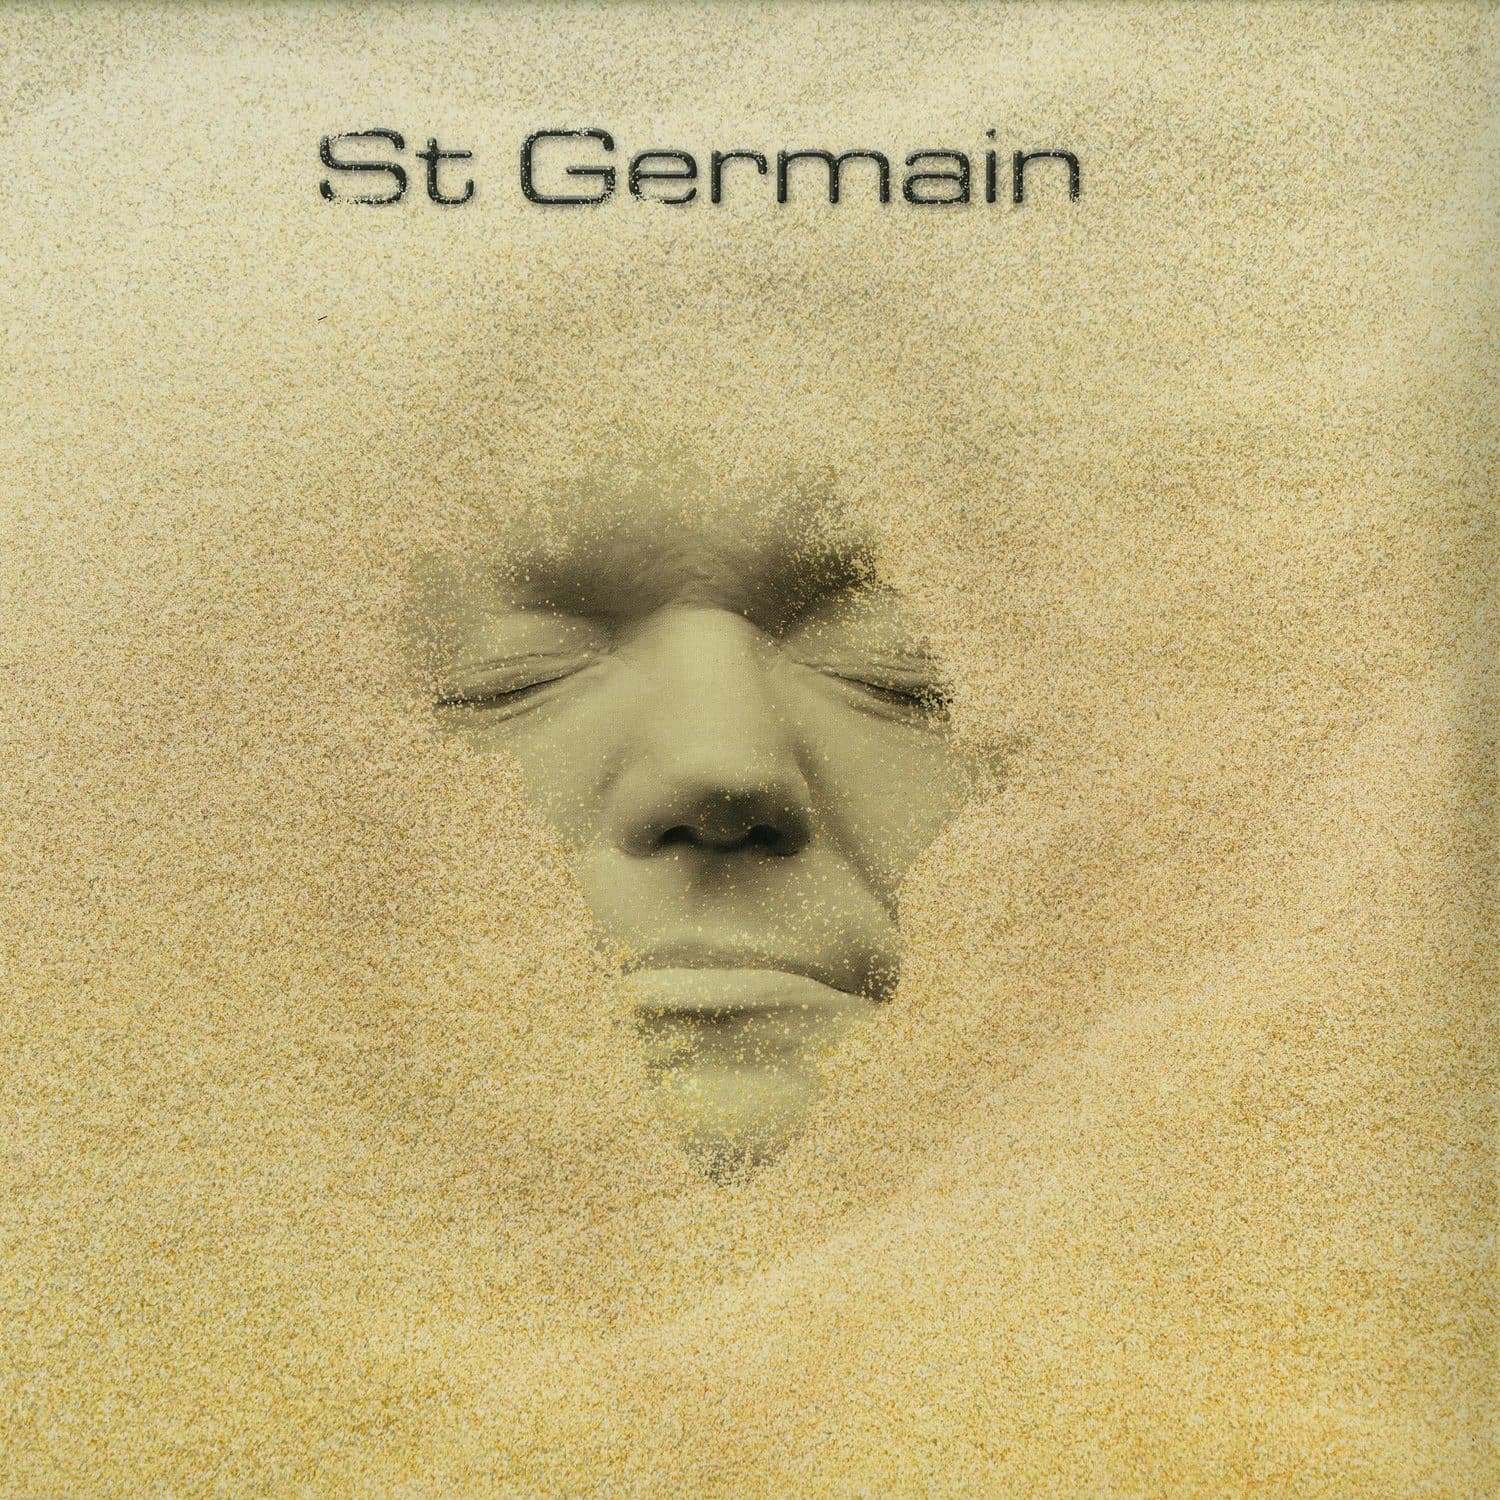 St Germain - ST GERMAIN 